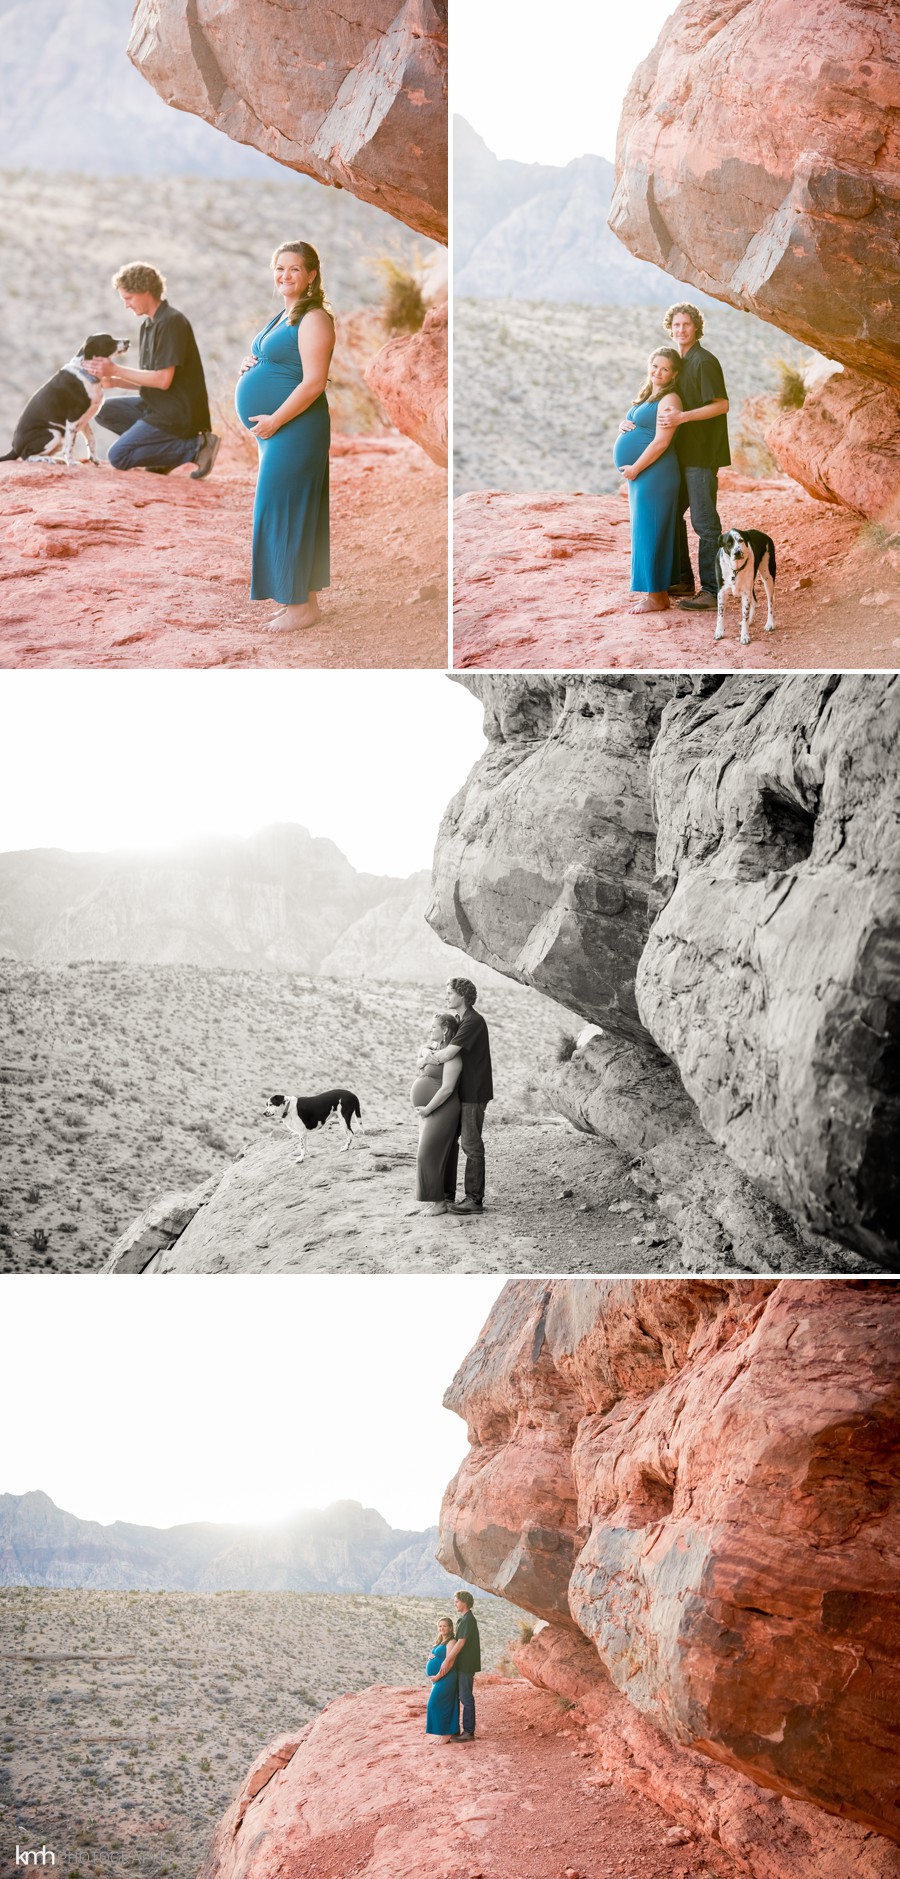 Desert Maternity Session | KMH Photography, Las Vegas Wedding Photographer